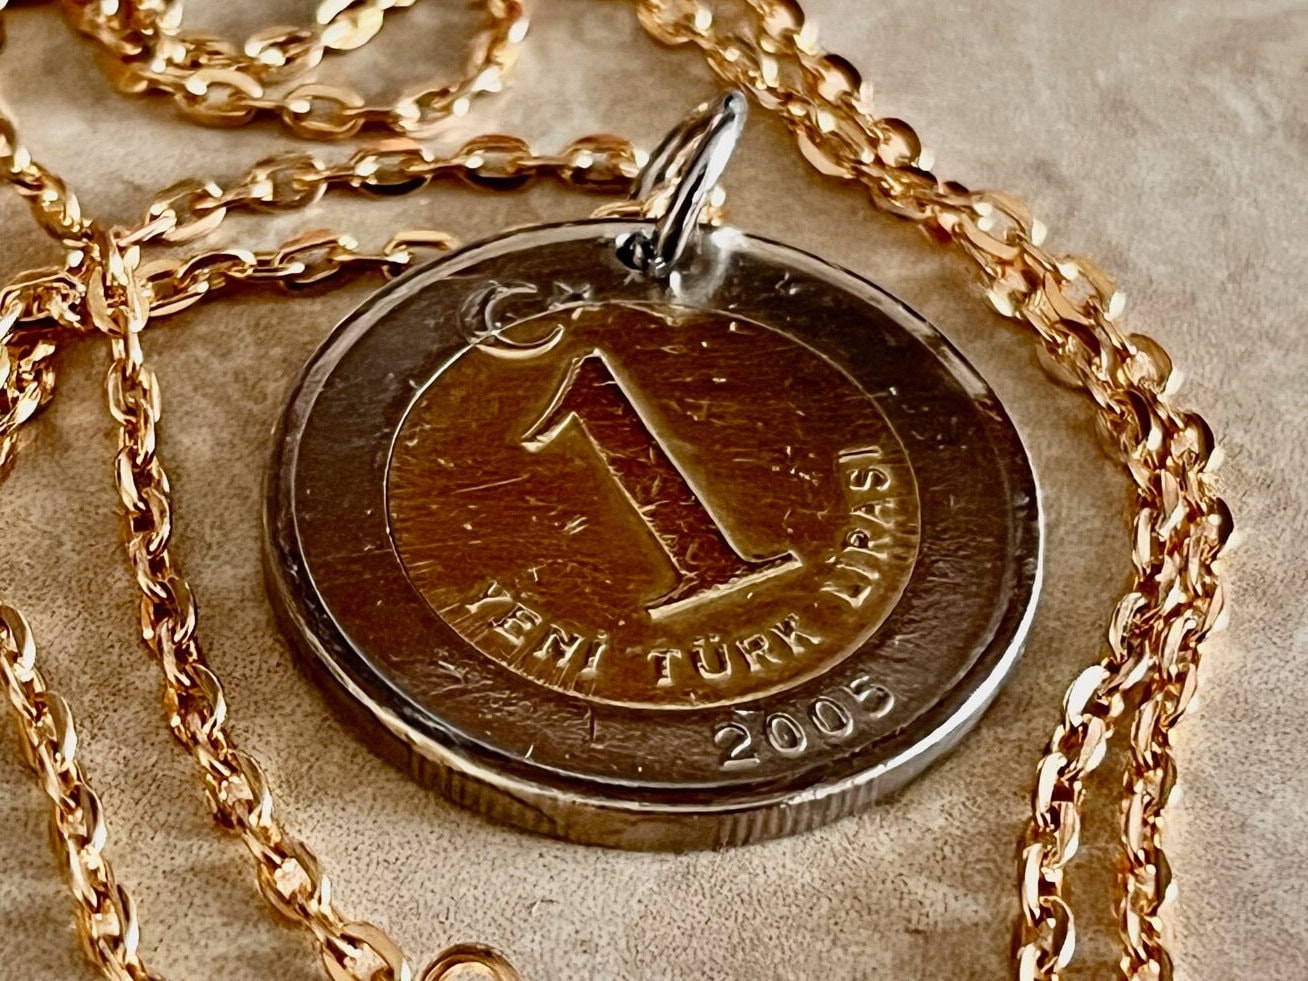 Turkey Coin Necklace Turkish 1 Lirasi Turkiye Cumhuriyeti Personal Handmade Jewelry Gift Friend Charm For Him Her World Coin Collector